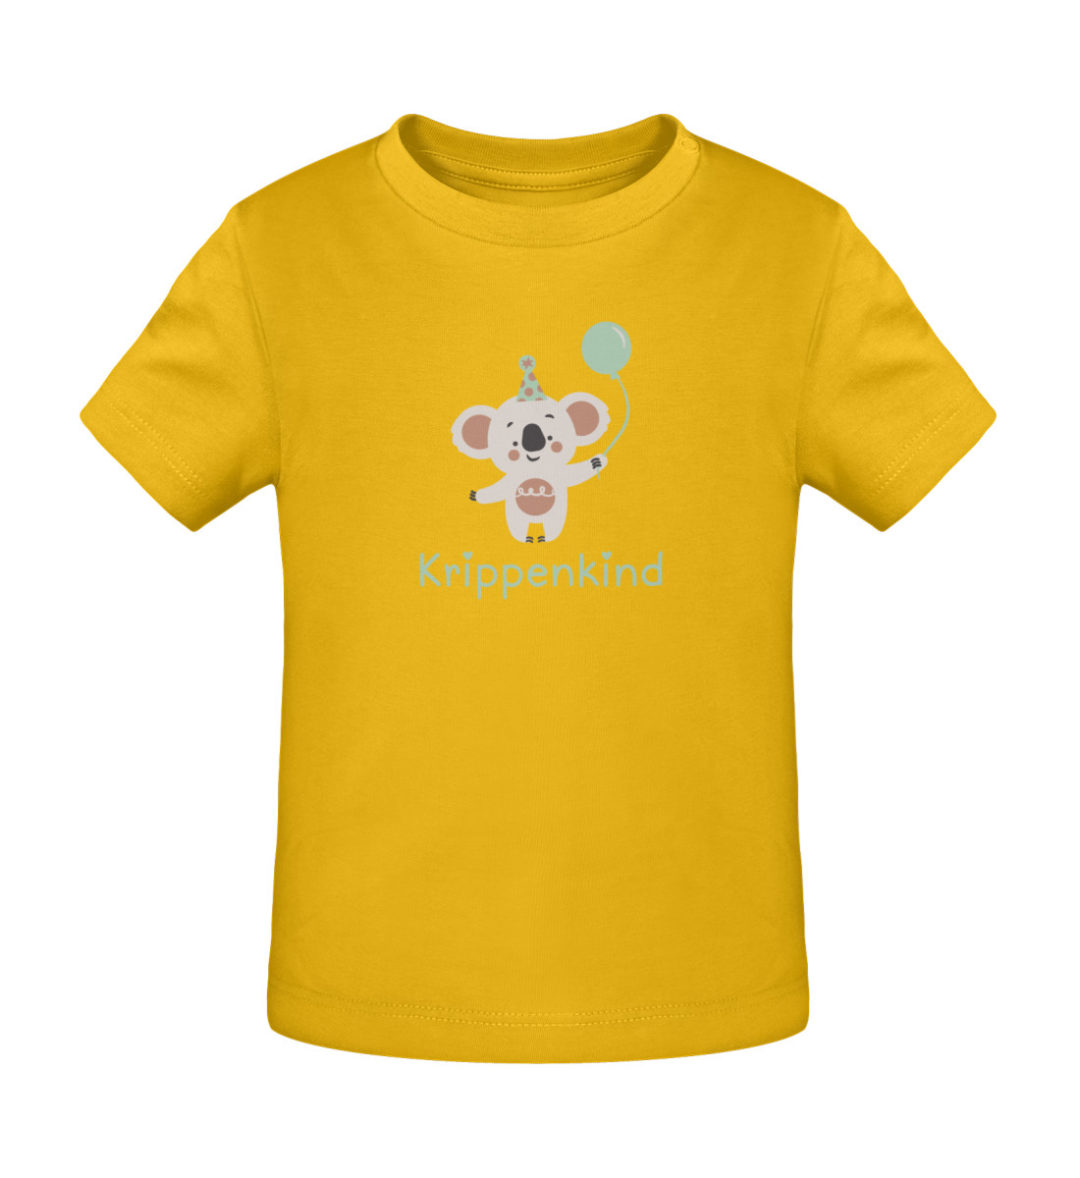 Krippenkind - Baby Creator T-Shirt ST/ST-6885